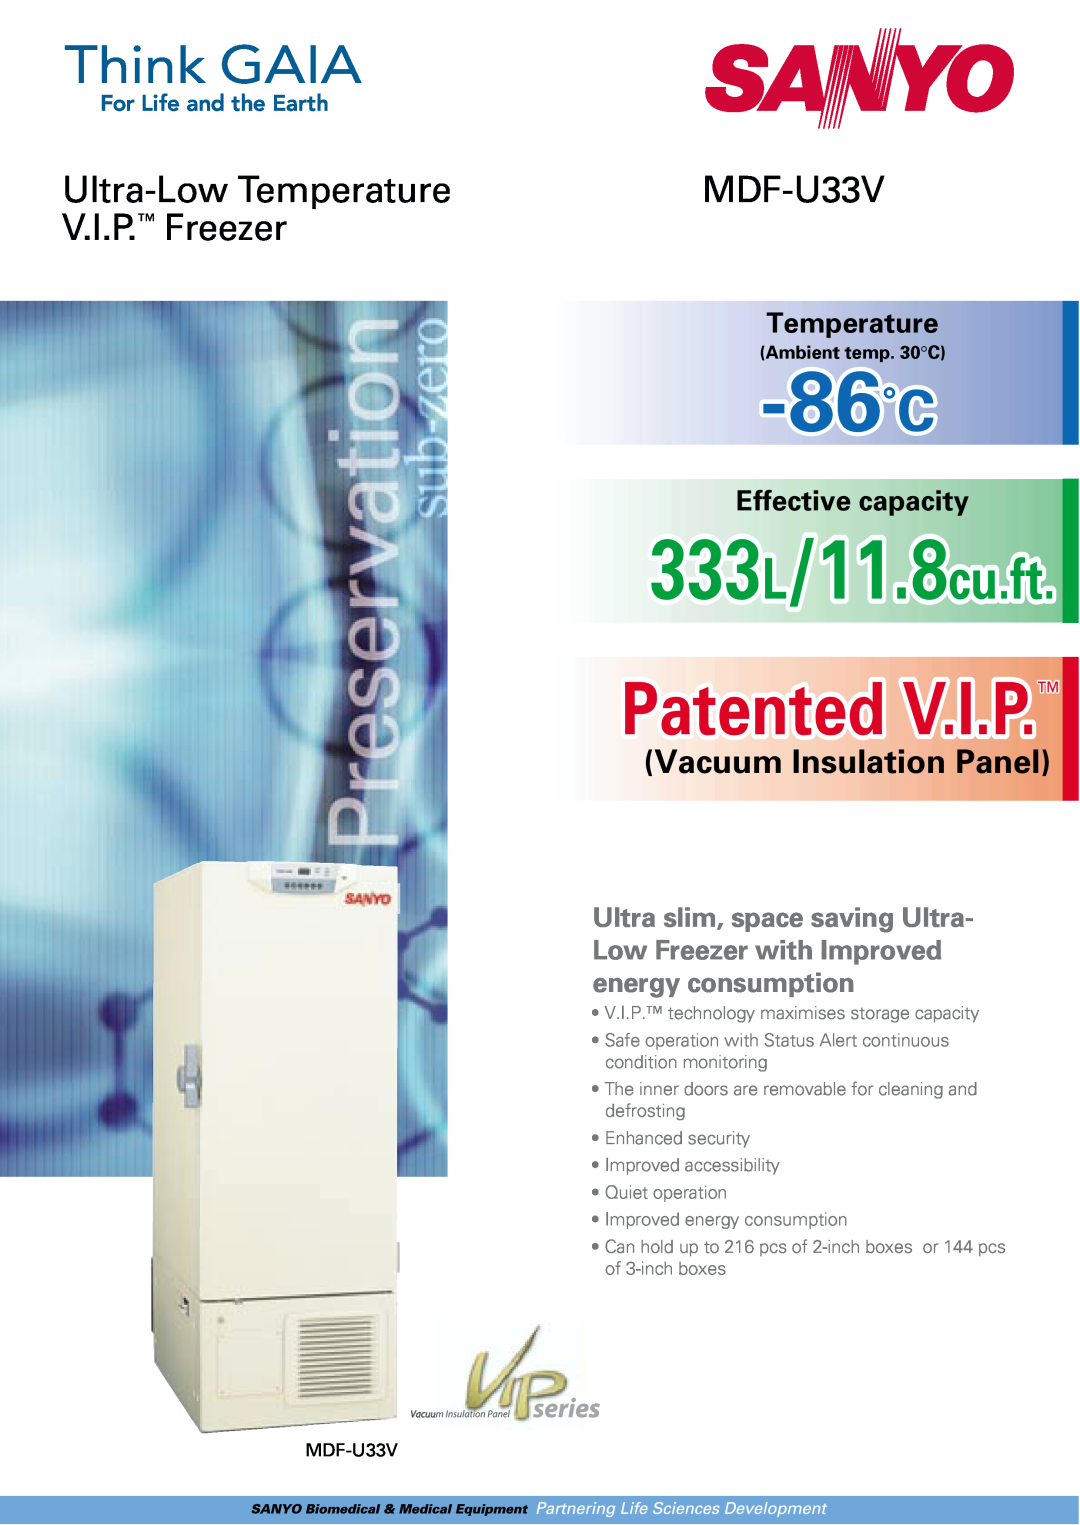 Sanyo MDF-U33V manual Ambient temp. 30C, 86˚C, Patented V.I.P, 333L/11.8cu.ft, Ultra-LowTemperature, V.I.P. Freezer 